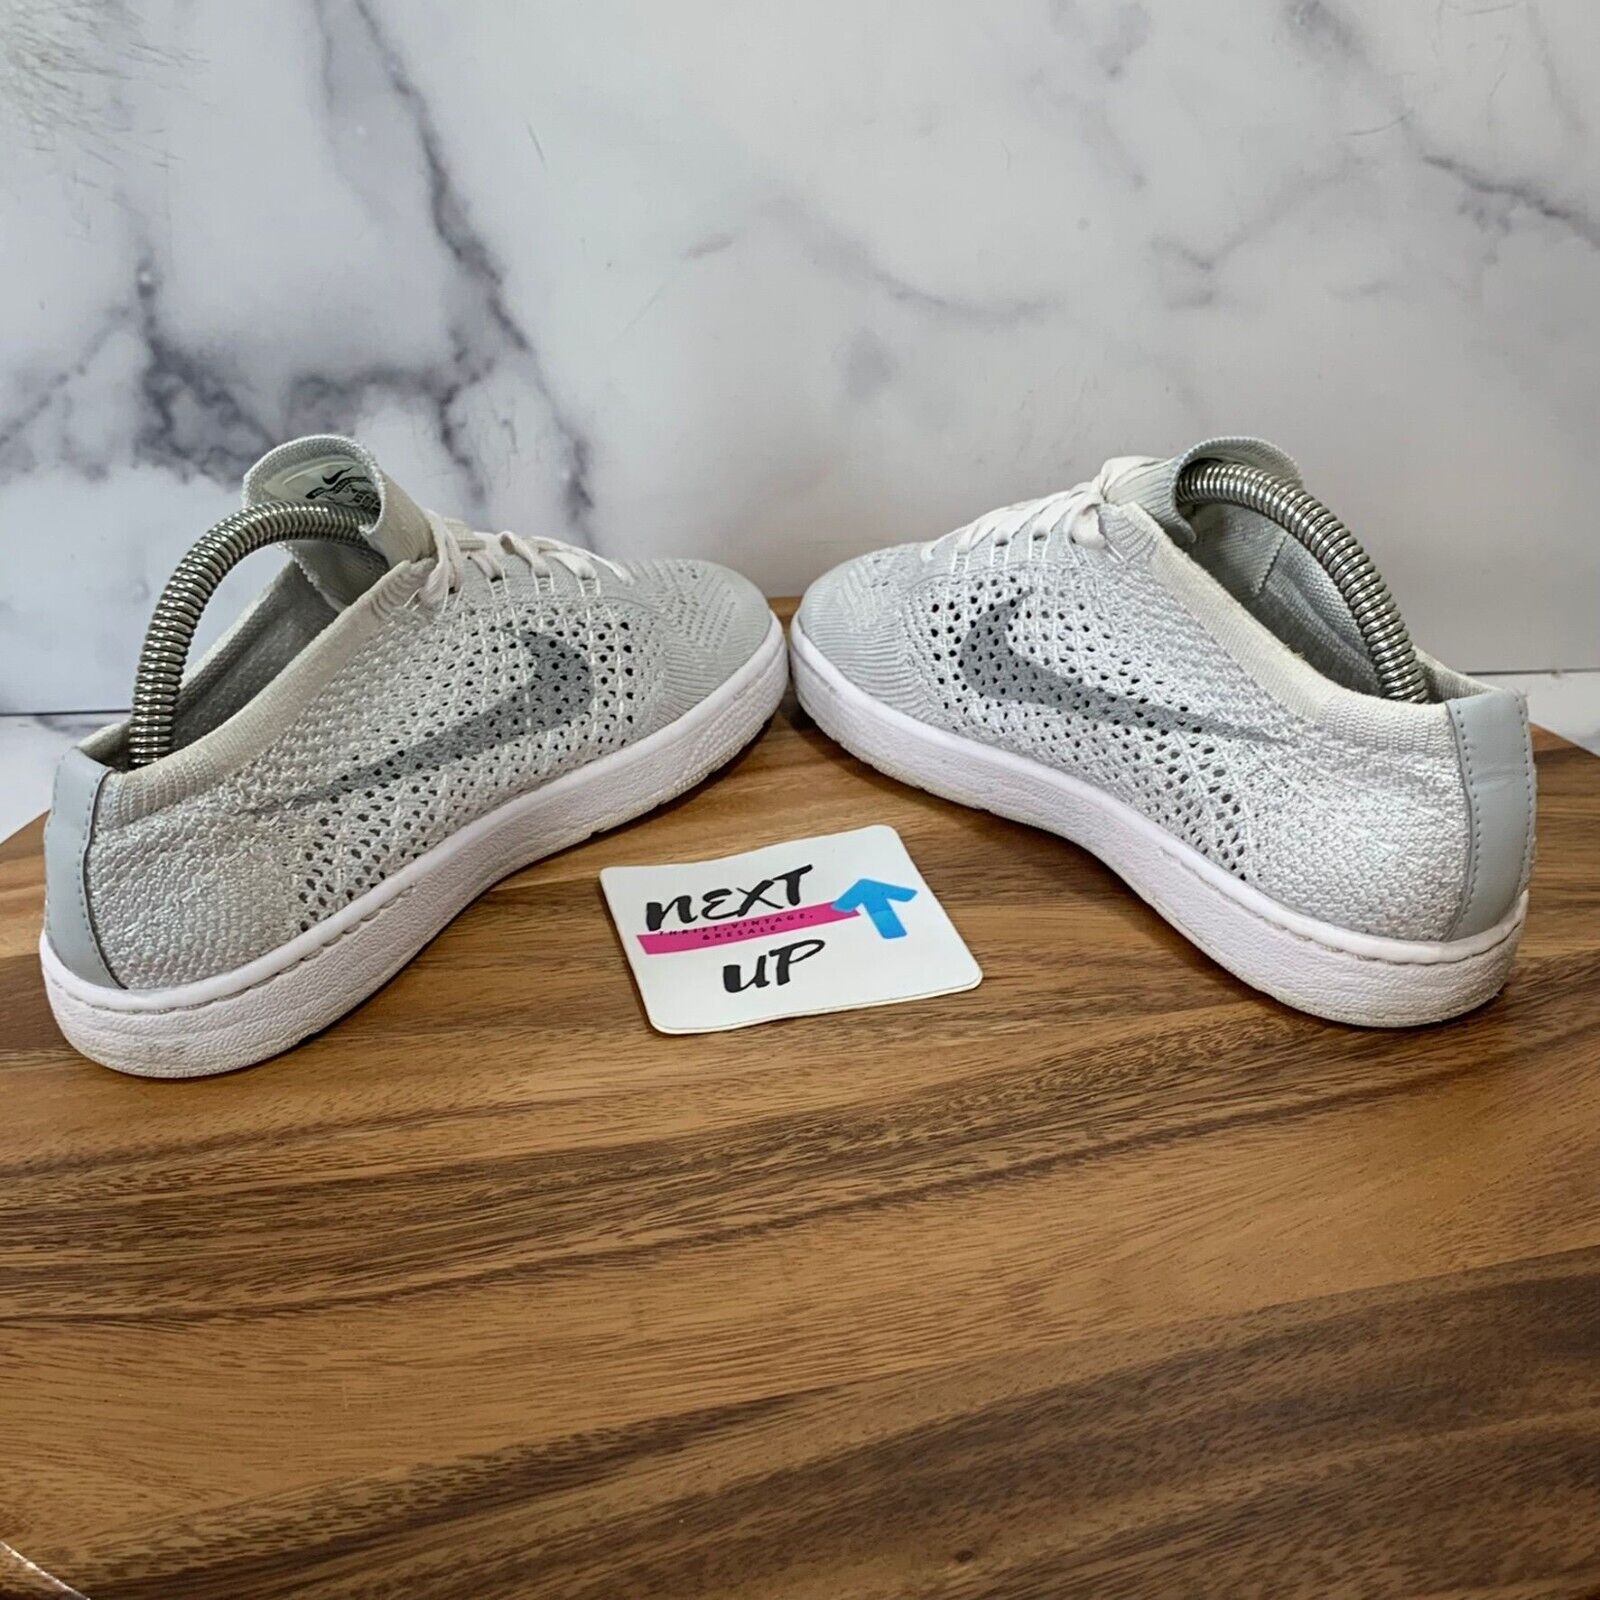 Nike Air Zoom Vapor X AA8027-105 White Mettalic Silver Tennis Shoes Women's Sz 8